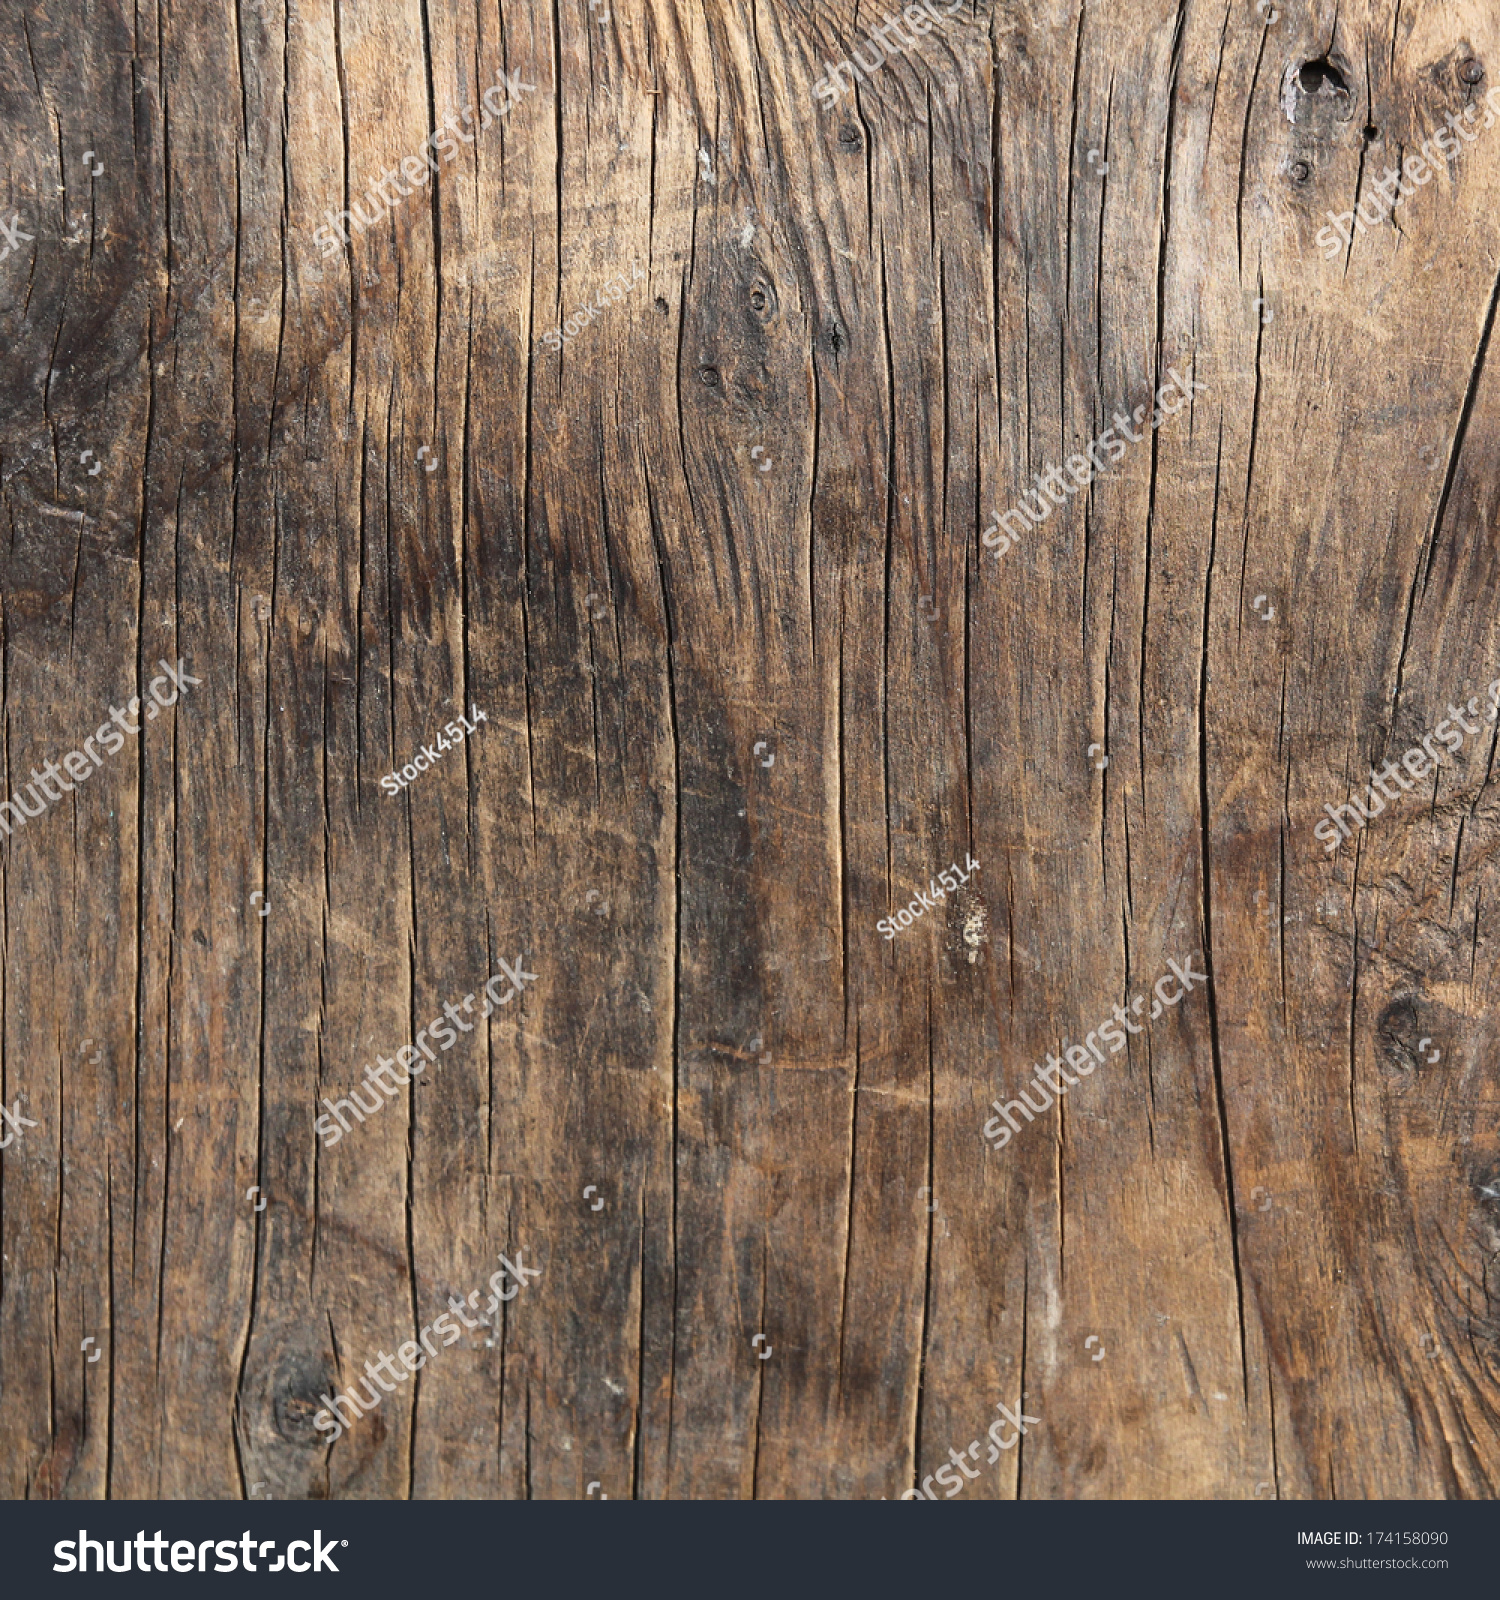 Skin Of Wood Texture. Wallpaper Stock Photo 174158090 : Shutterstock